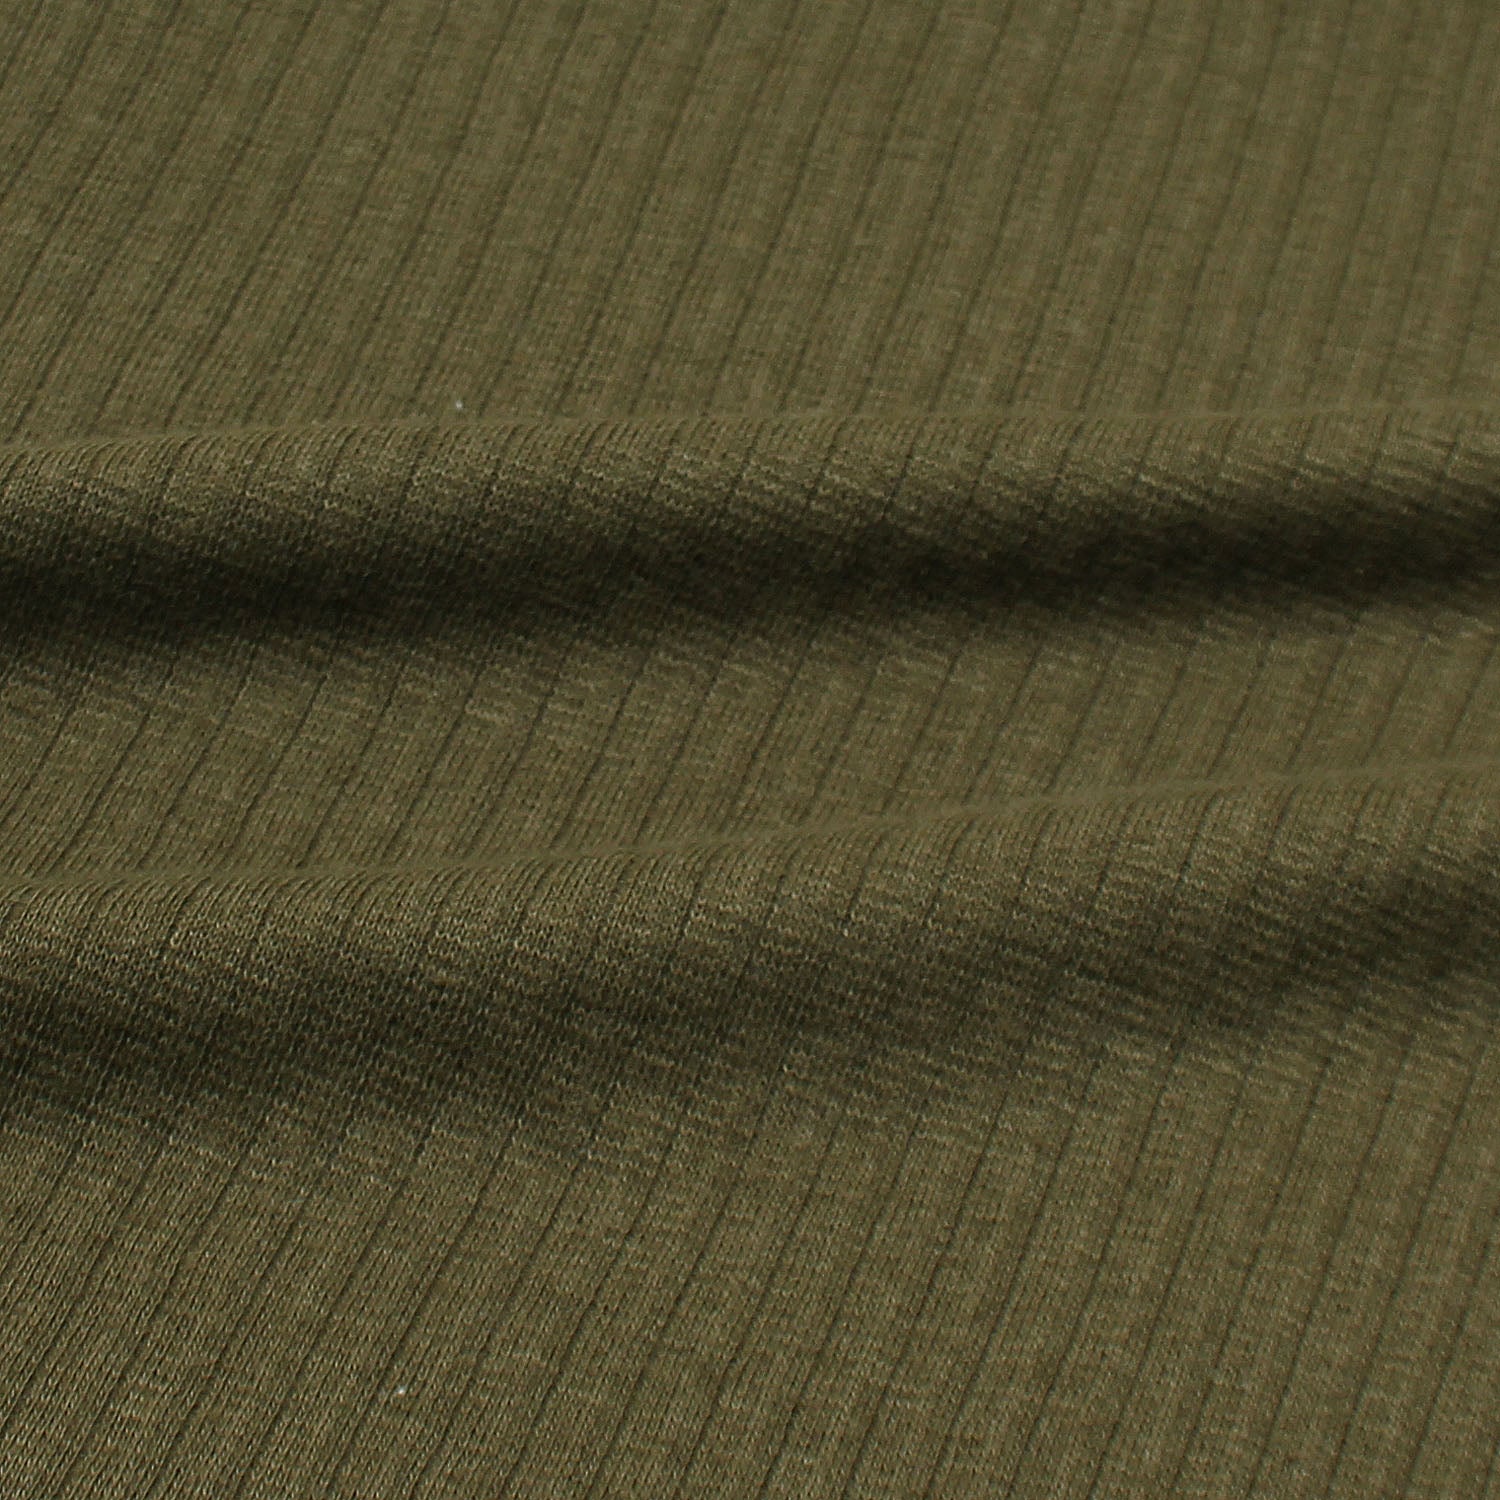 Full Sleeve Turtle Neck Bodysuit Isawitfirst-2292-Fx1036-Olive